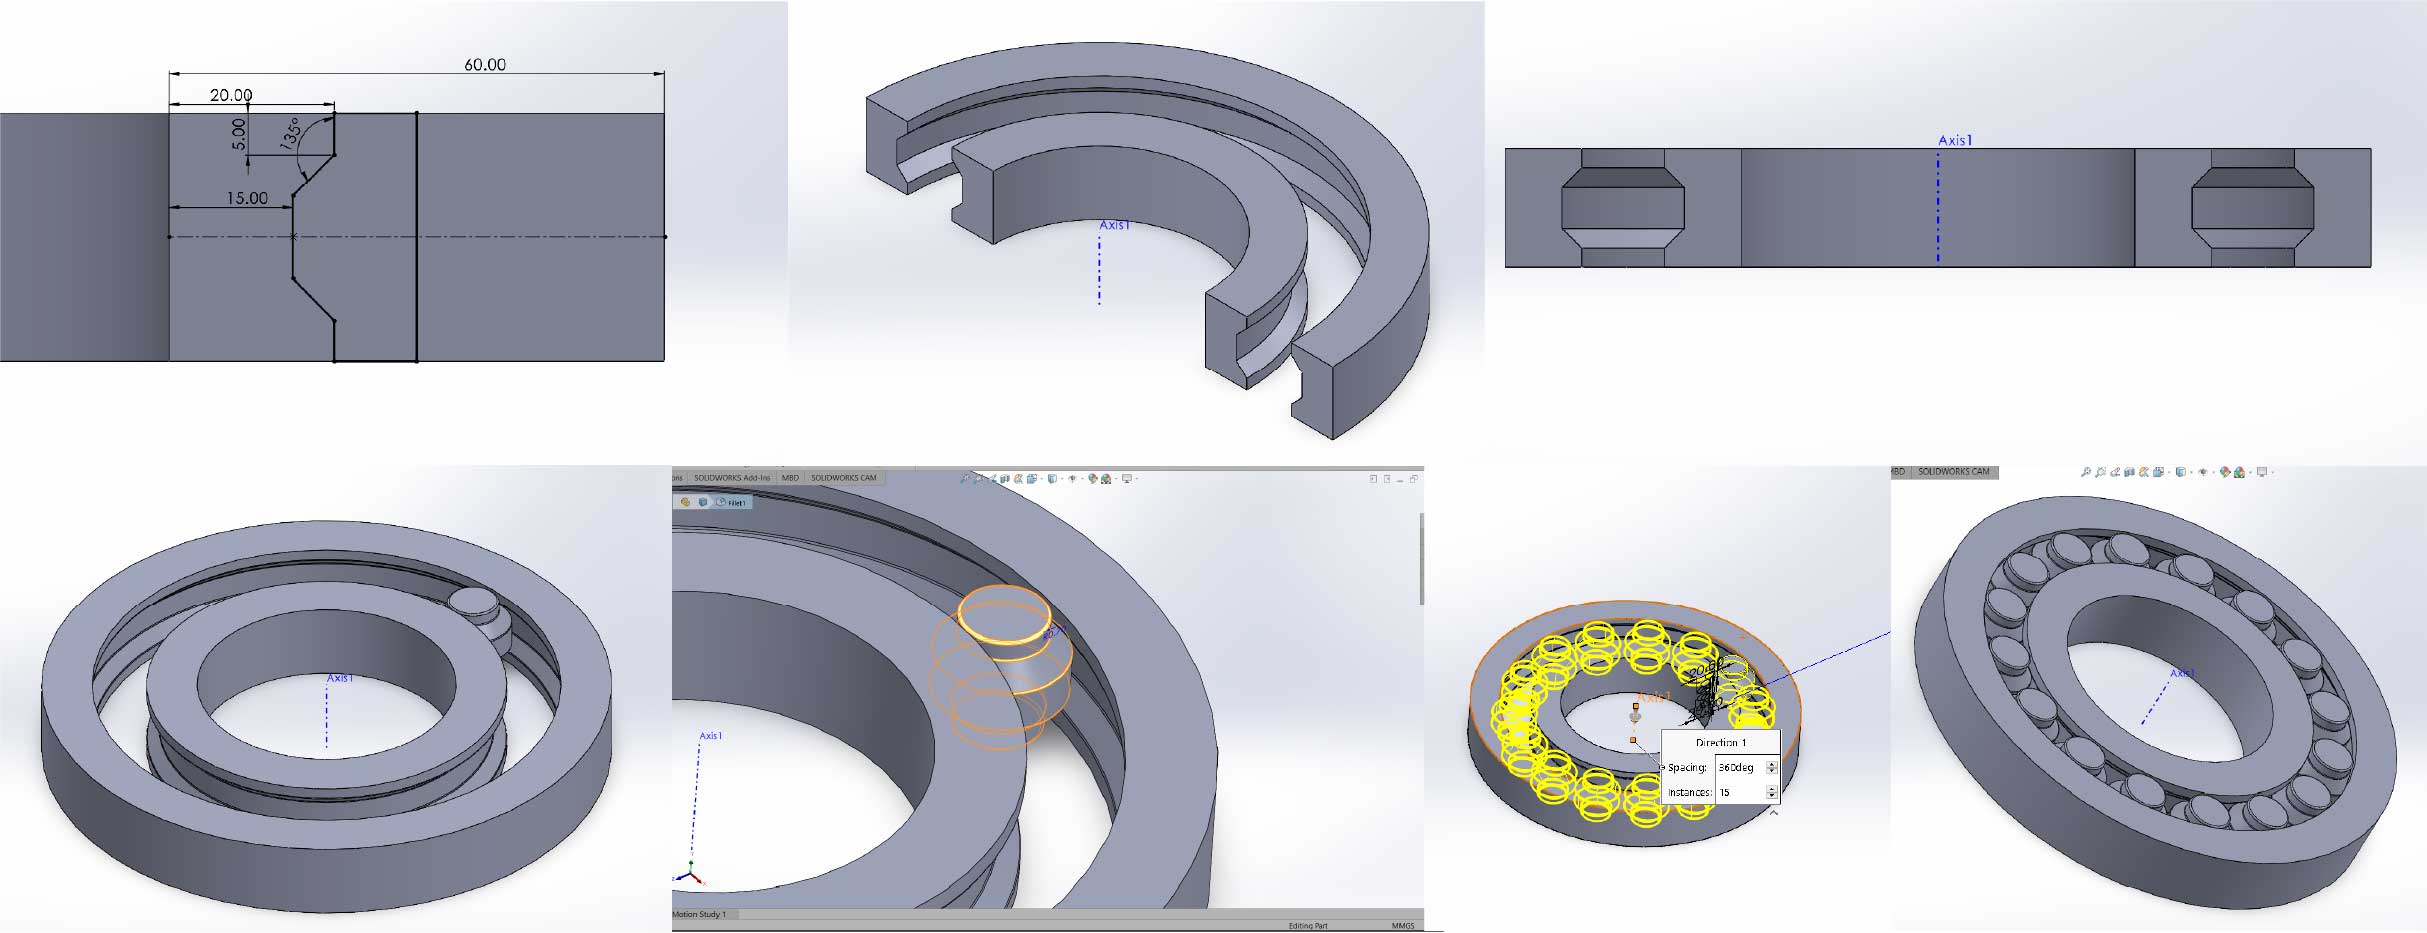 working model of bearing